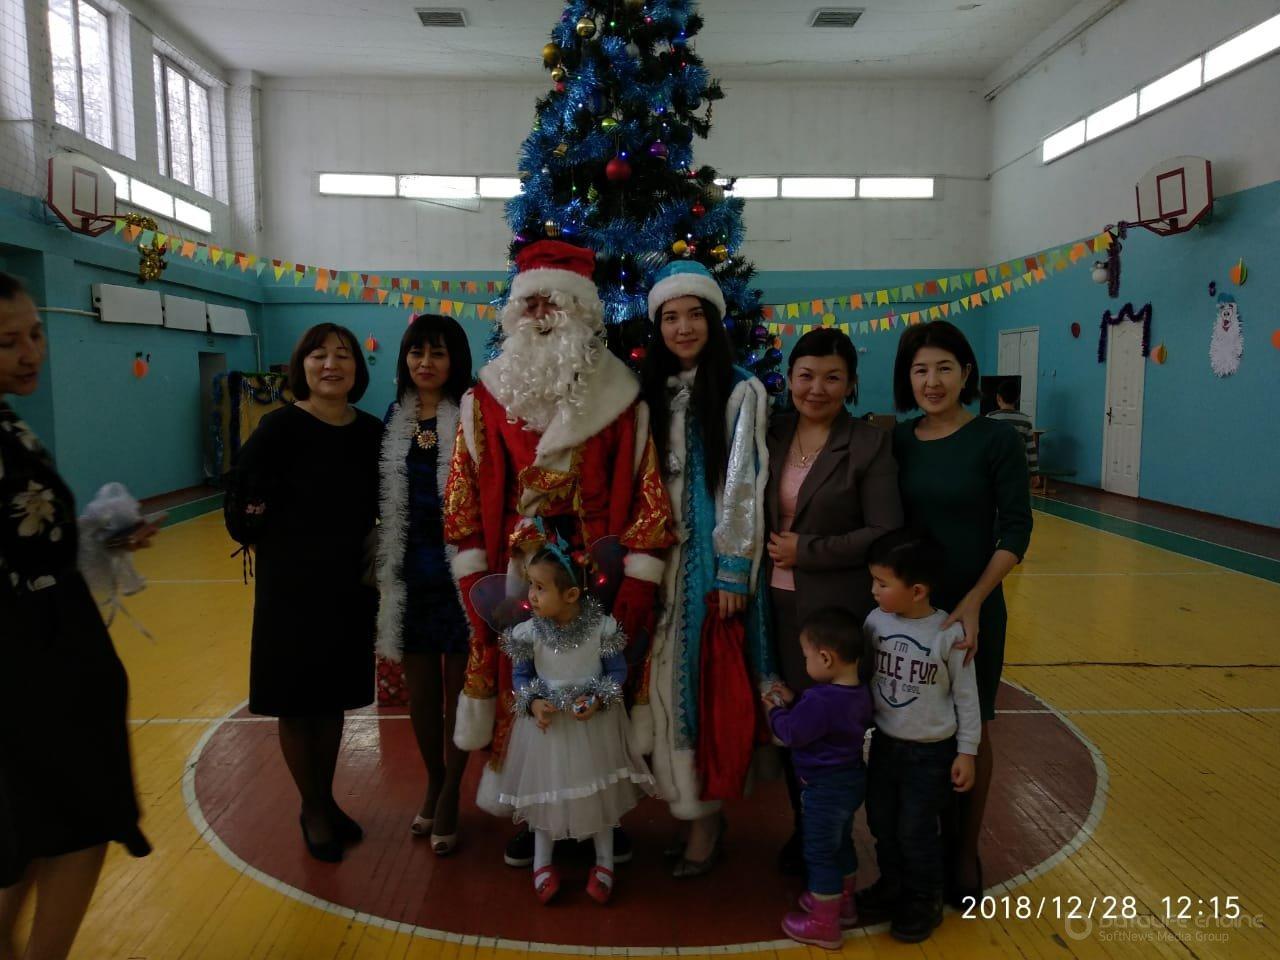 Администрация школы провела новогодний праздник для детей коллектива школы. Огромное СПАСИБО от коллектива!!!